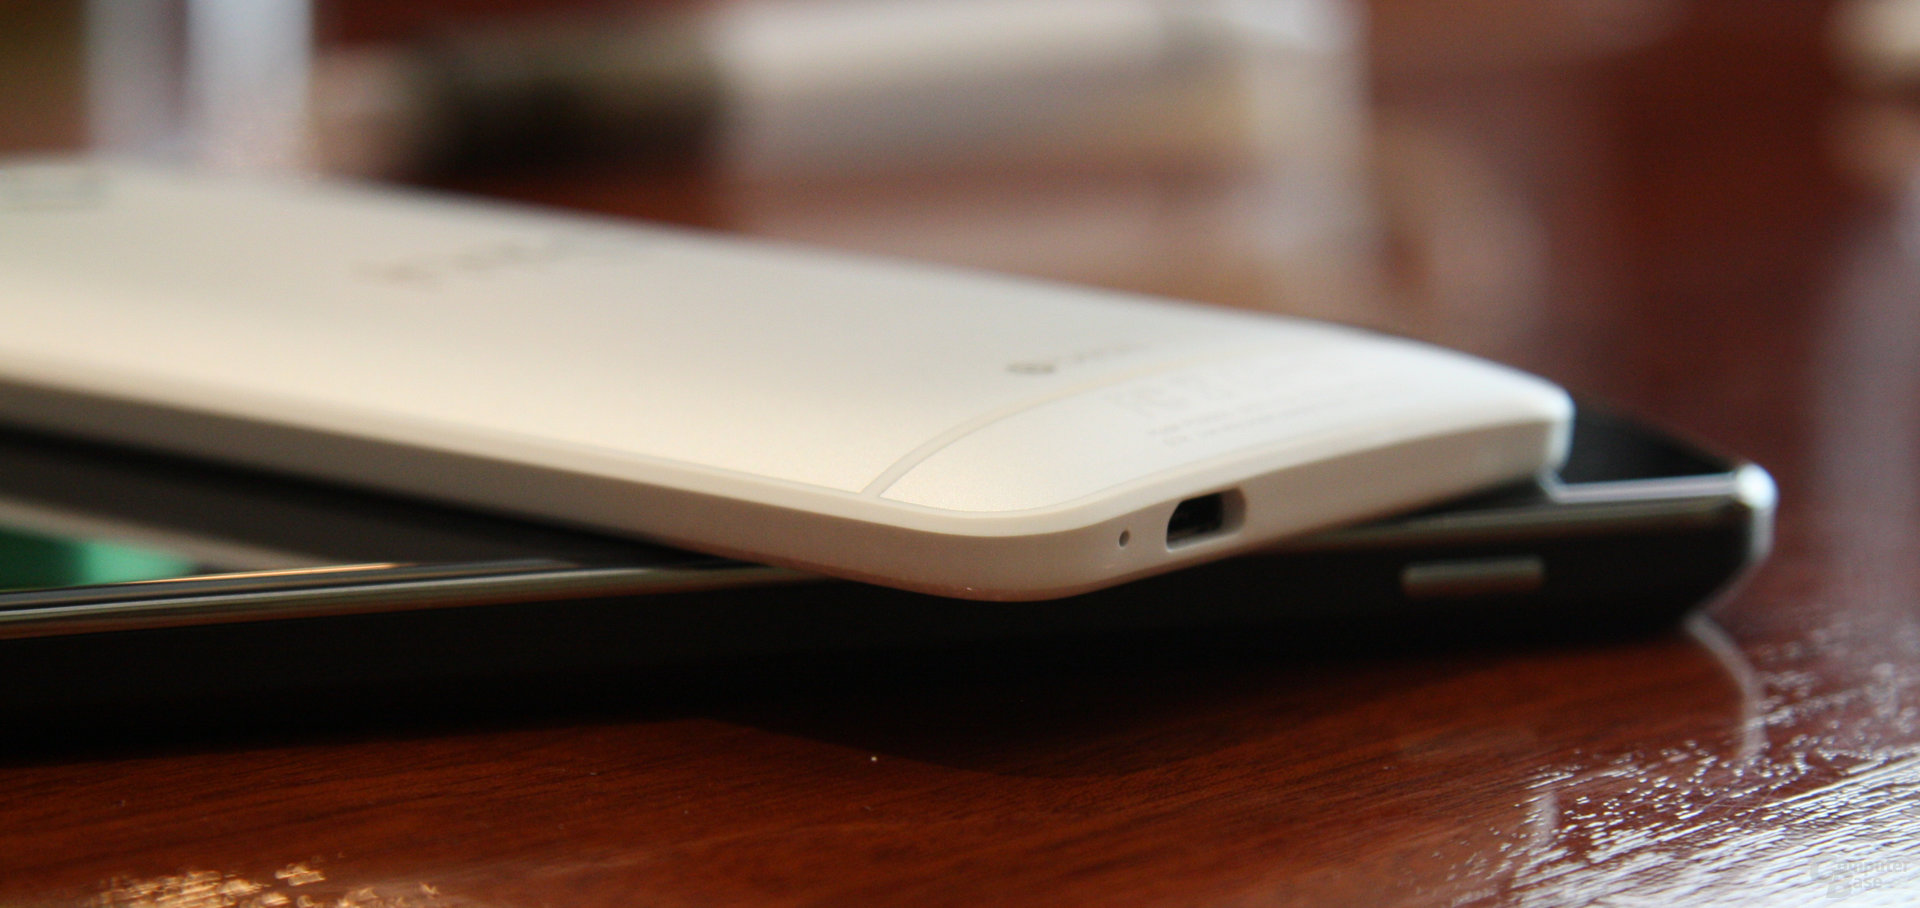 HTC One mini / Google Nexus 4